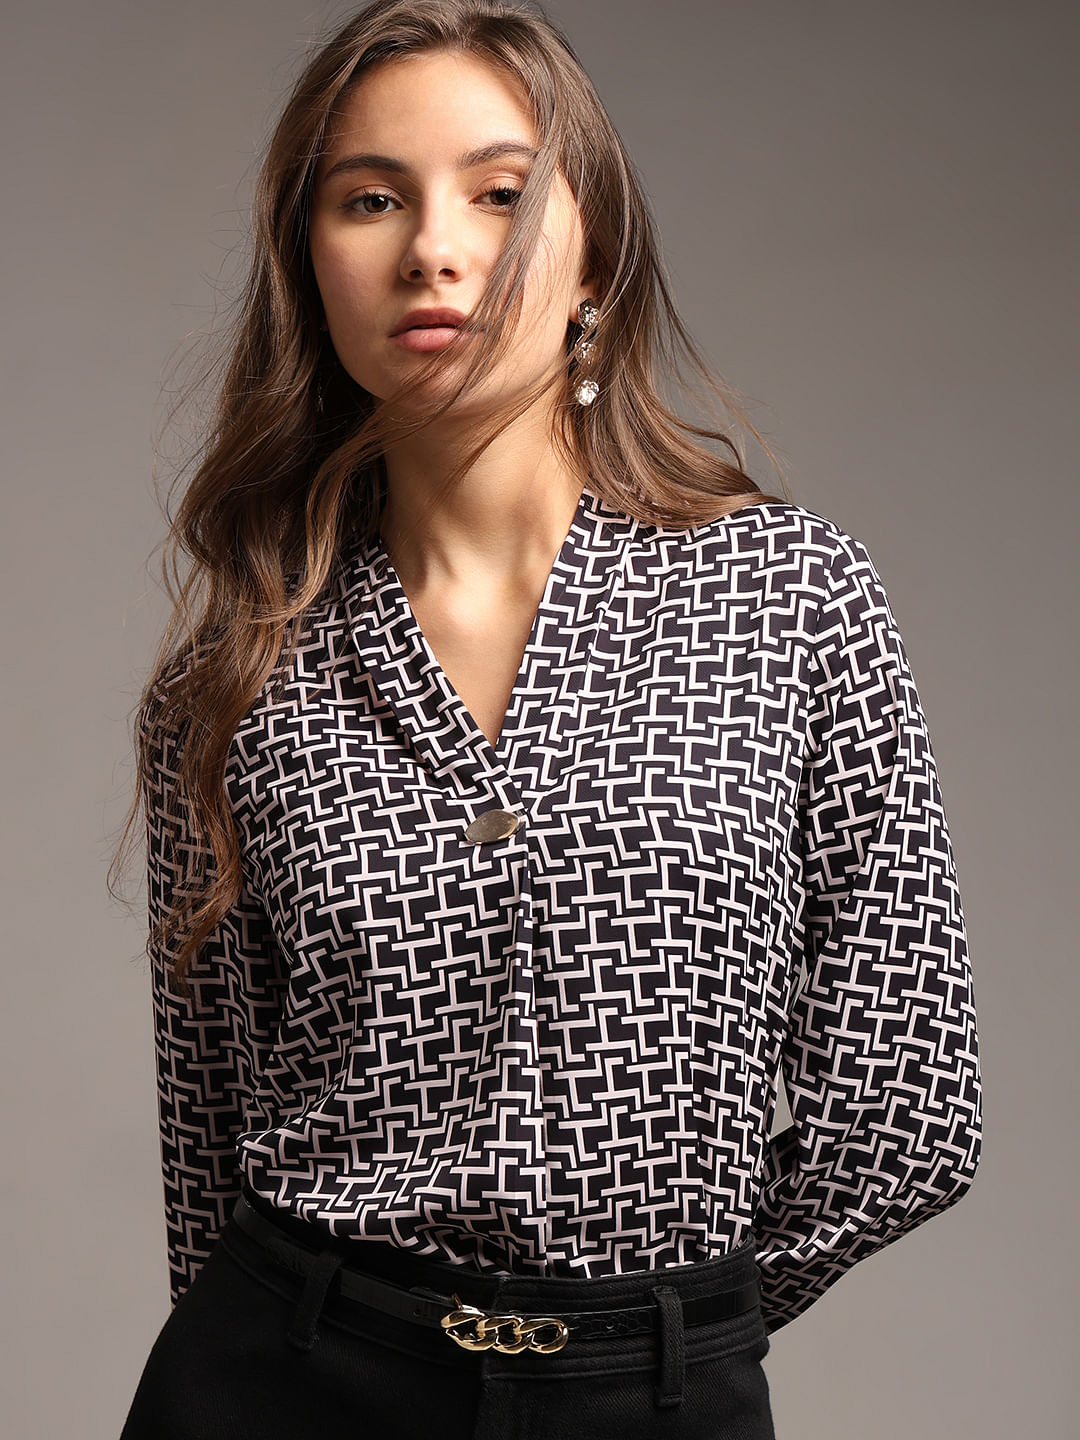 Ladies Winter Plus Size Casual Mini Jumper Dress Sweatshirts Tops Fleece |  eBay